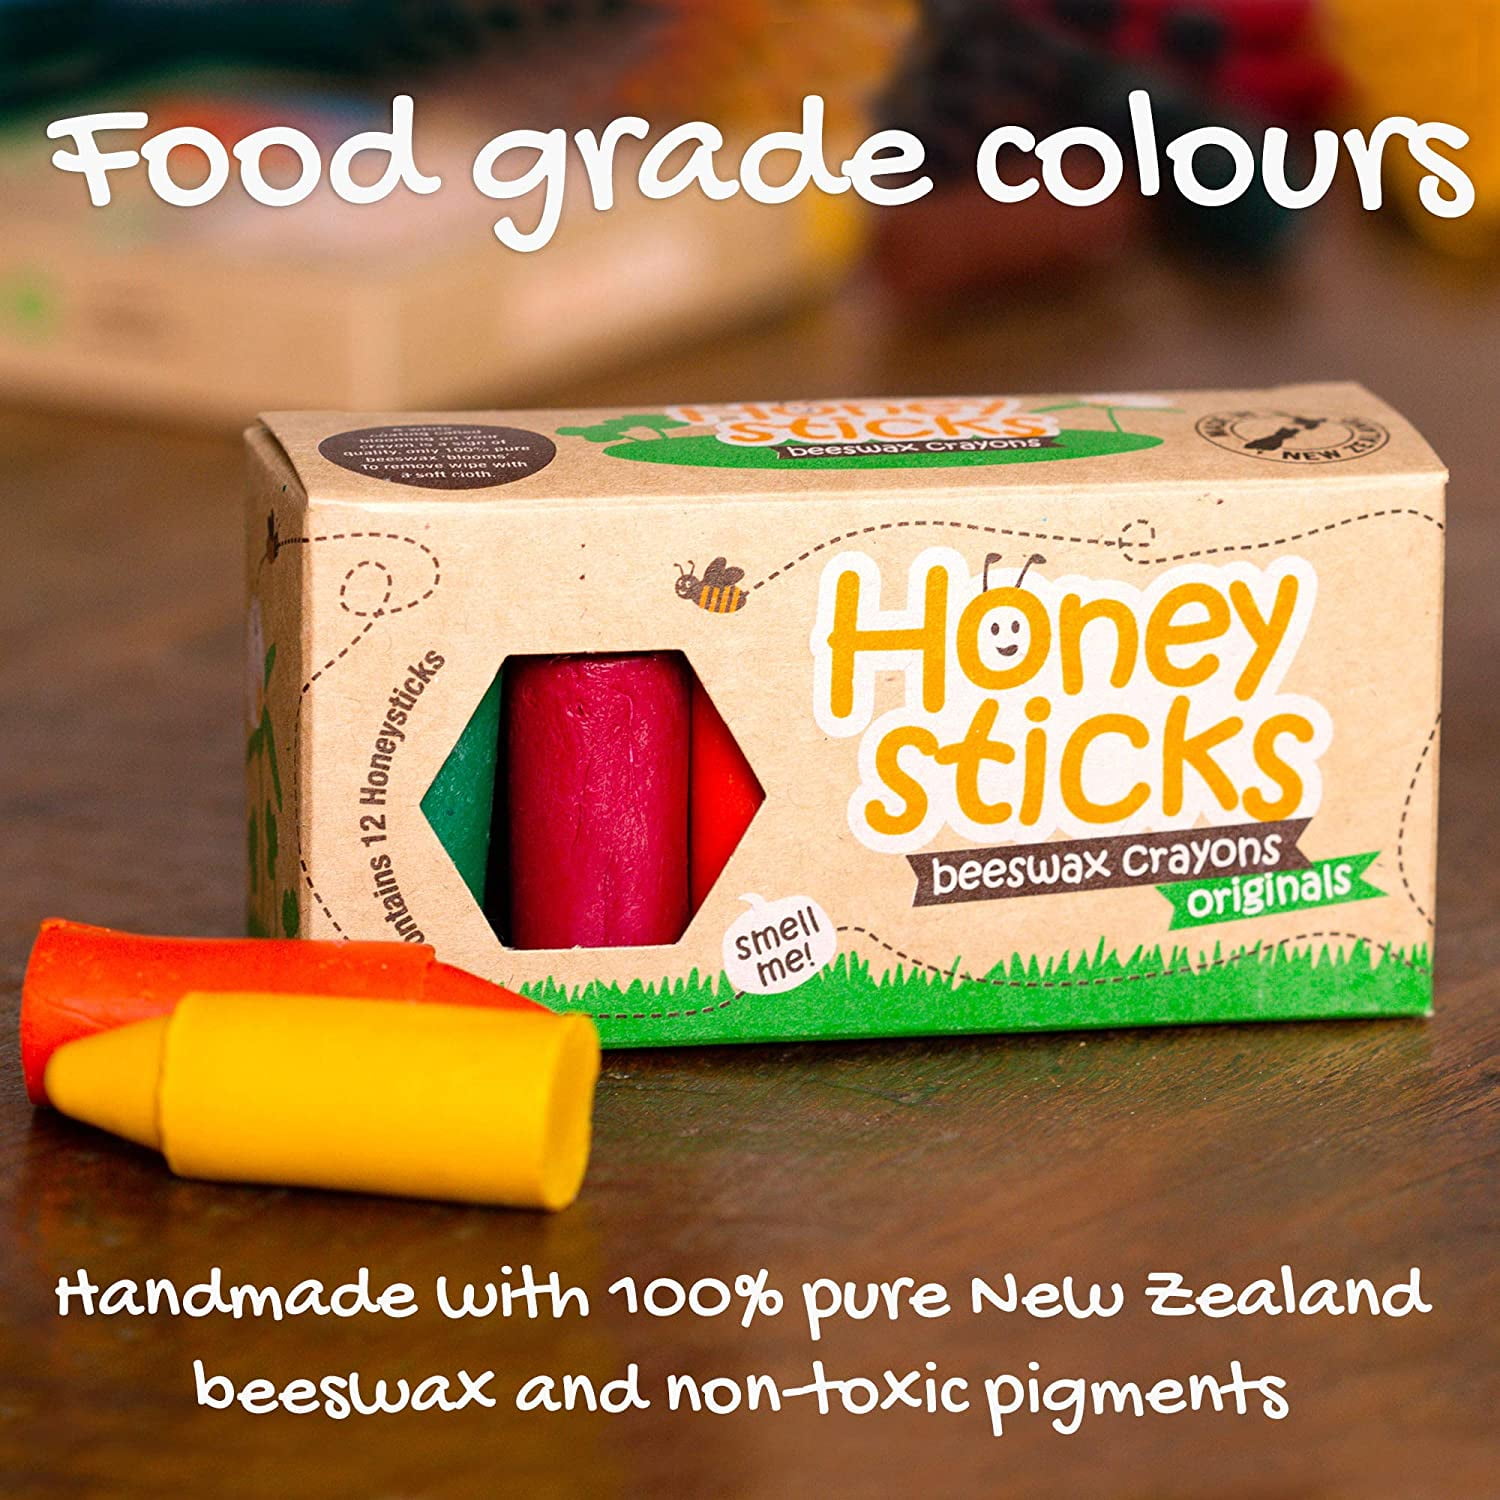 Honeysticks 100% Natural Beeswax Crayons and Coloring Book Pack